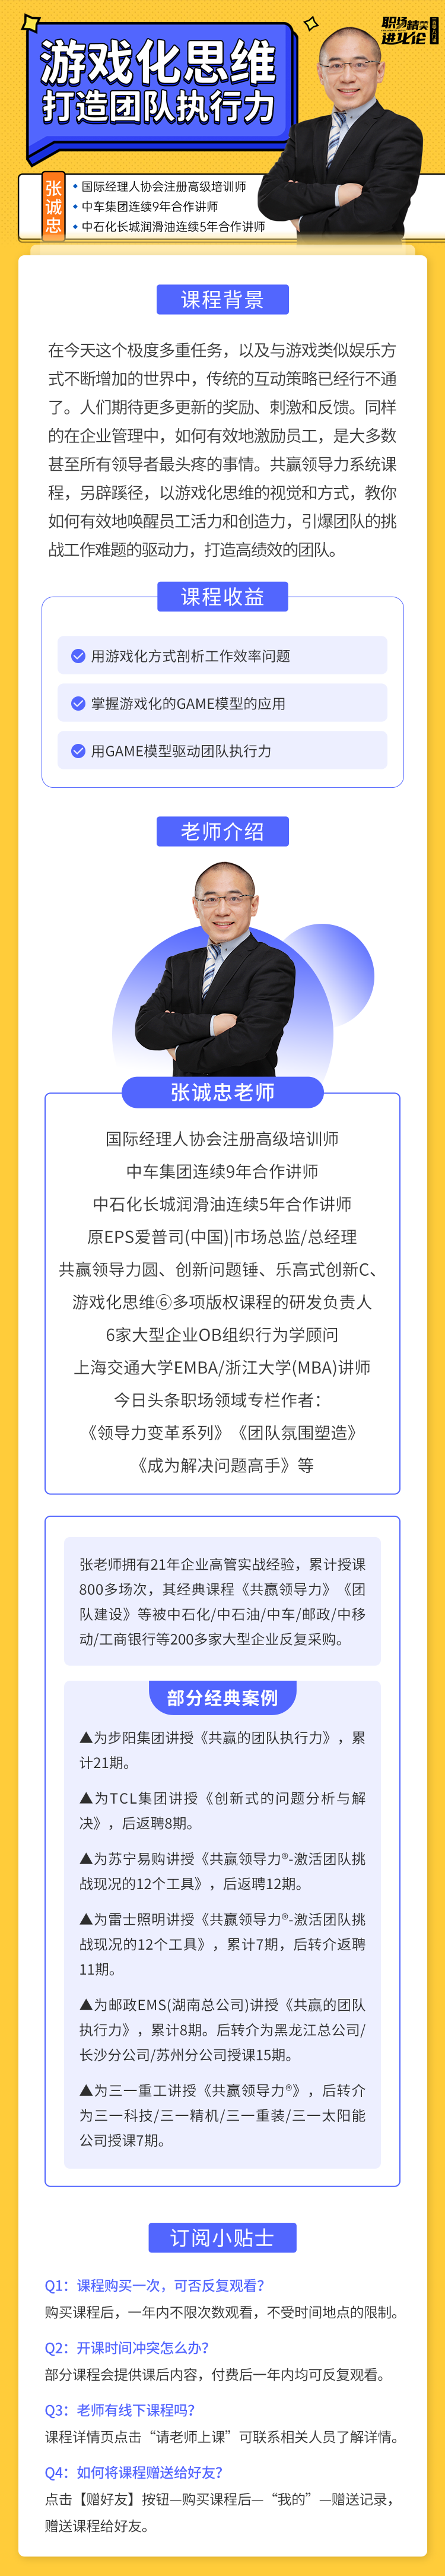 https://ksb-1253359580.cos.ap-guangzhou.myqcloud.com/newhdp/live_cover/live/20848/67fd2117c9f1680338075996fbaf57cf.png